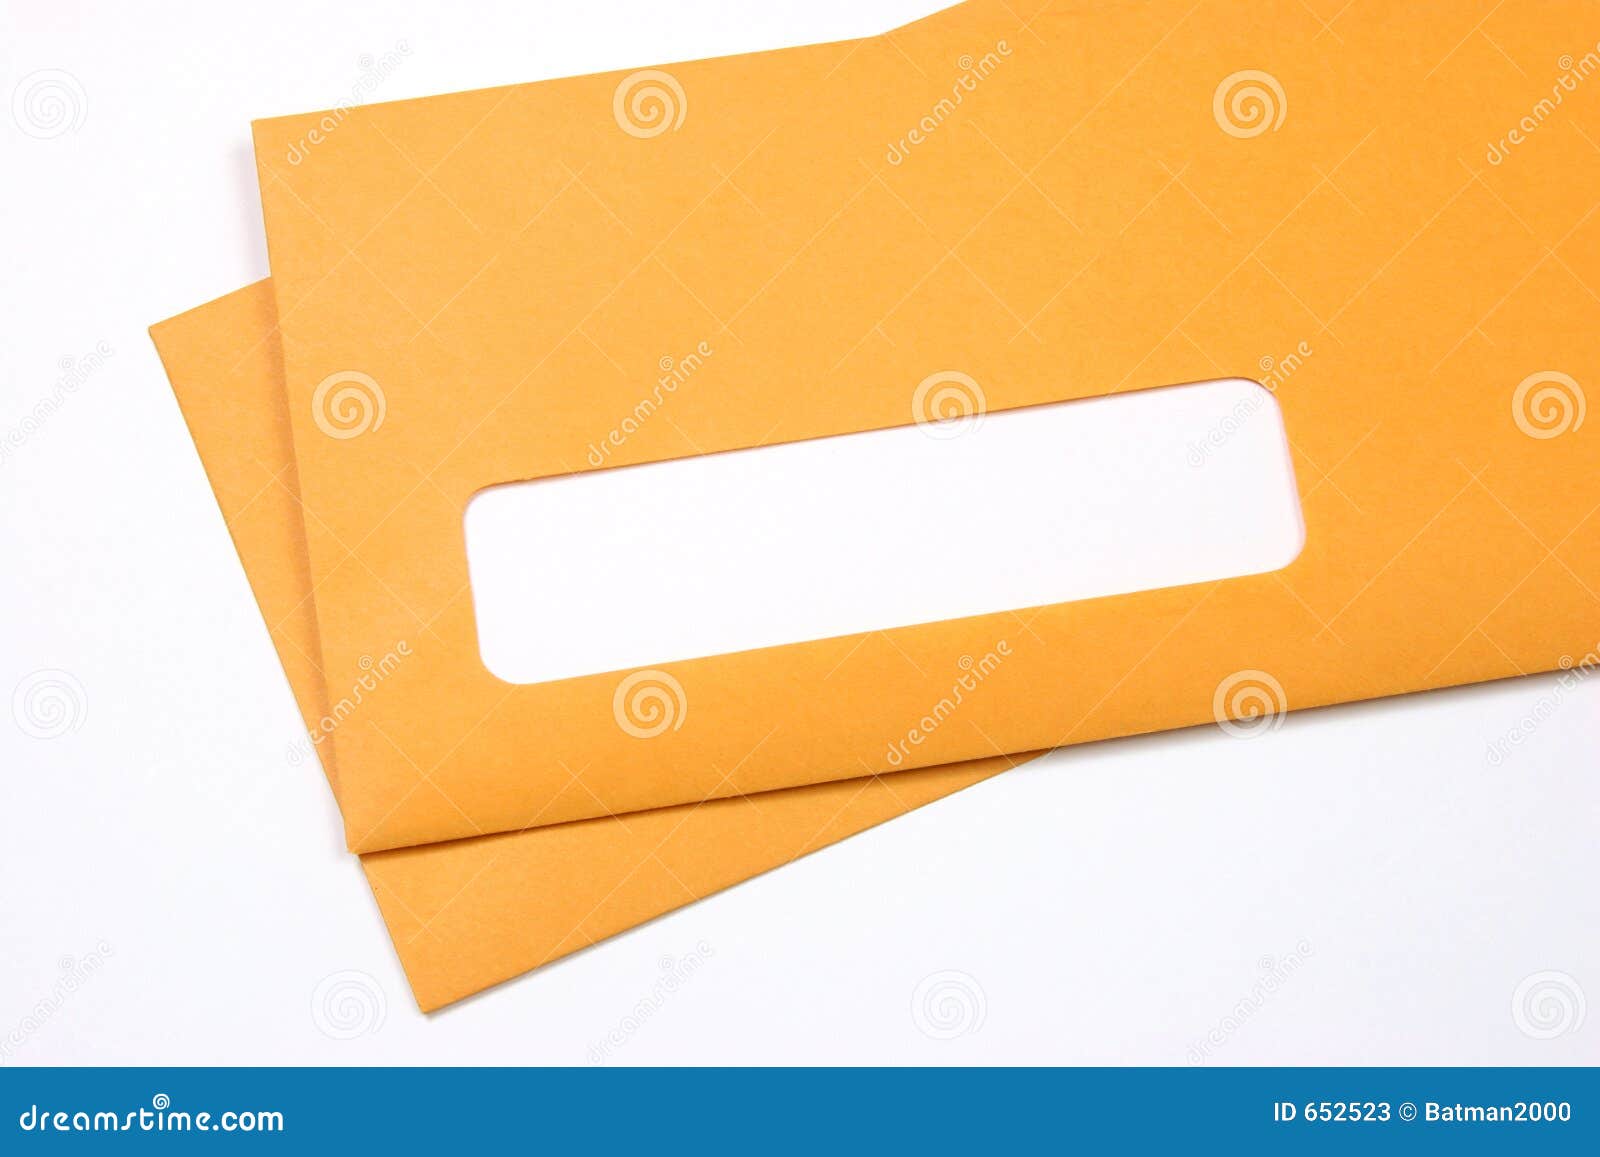 manila envelopes over white